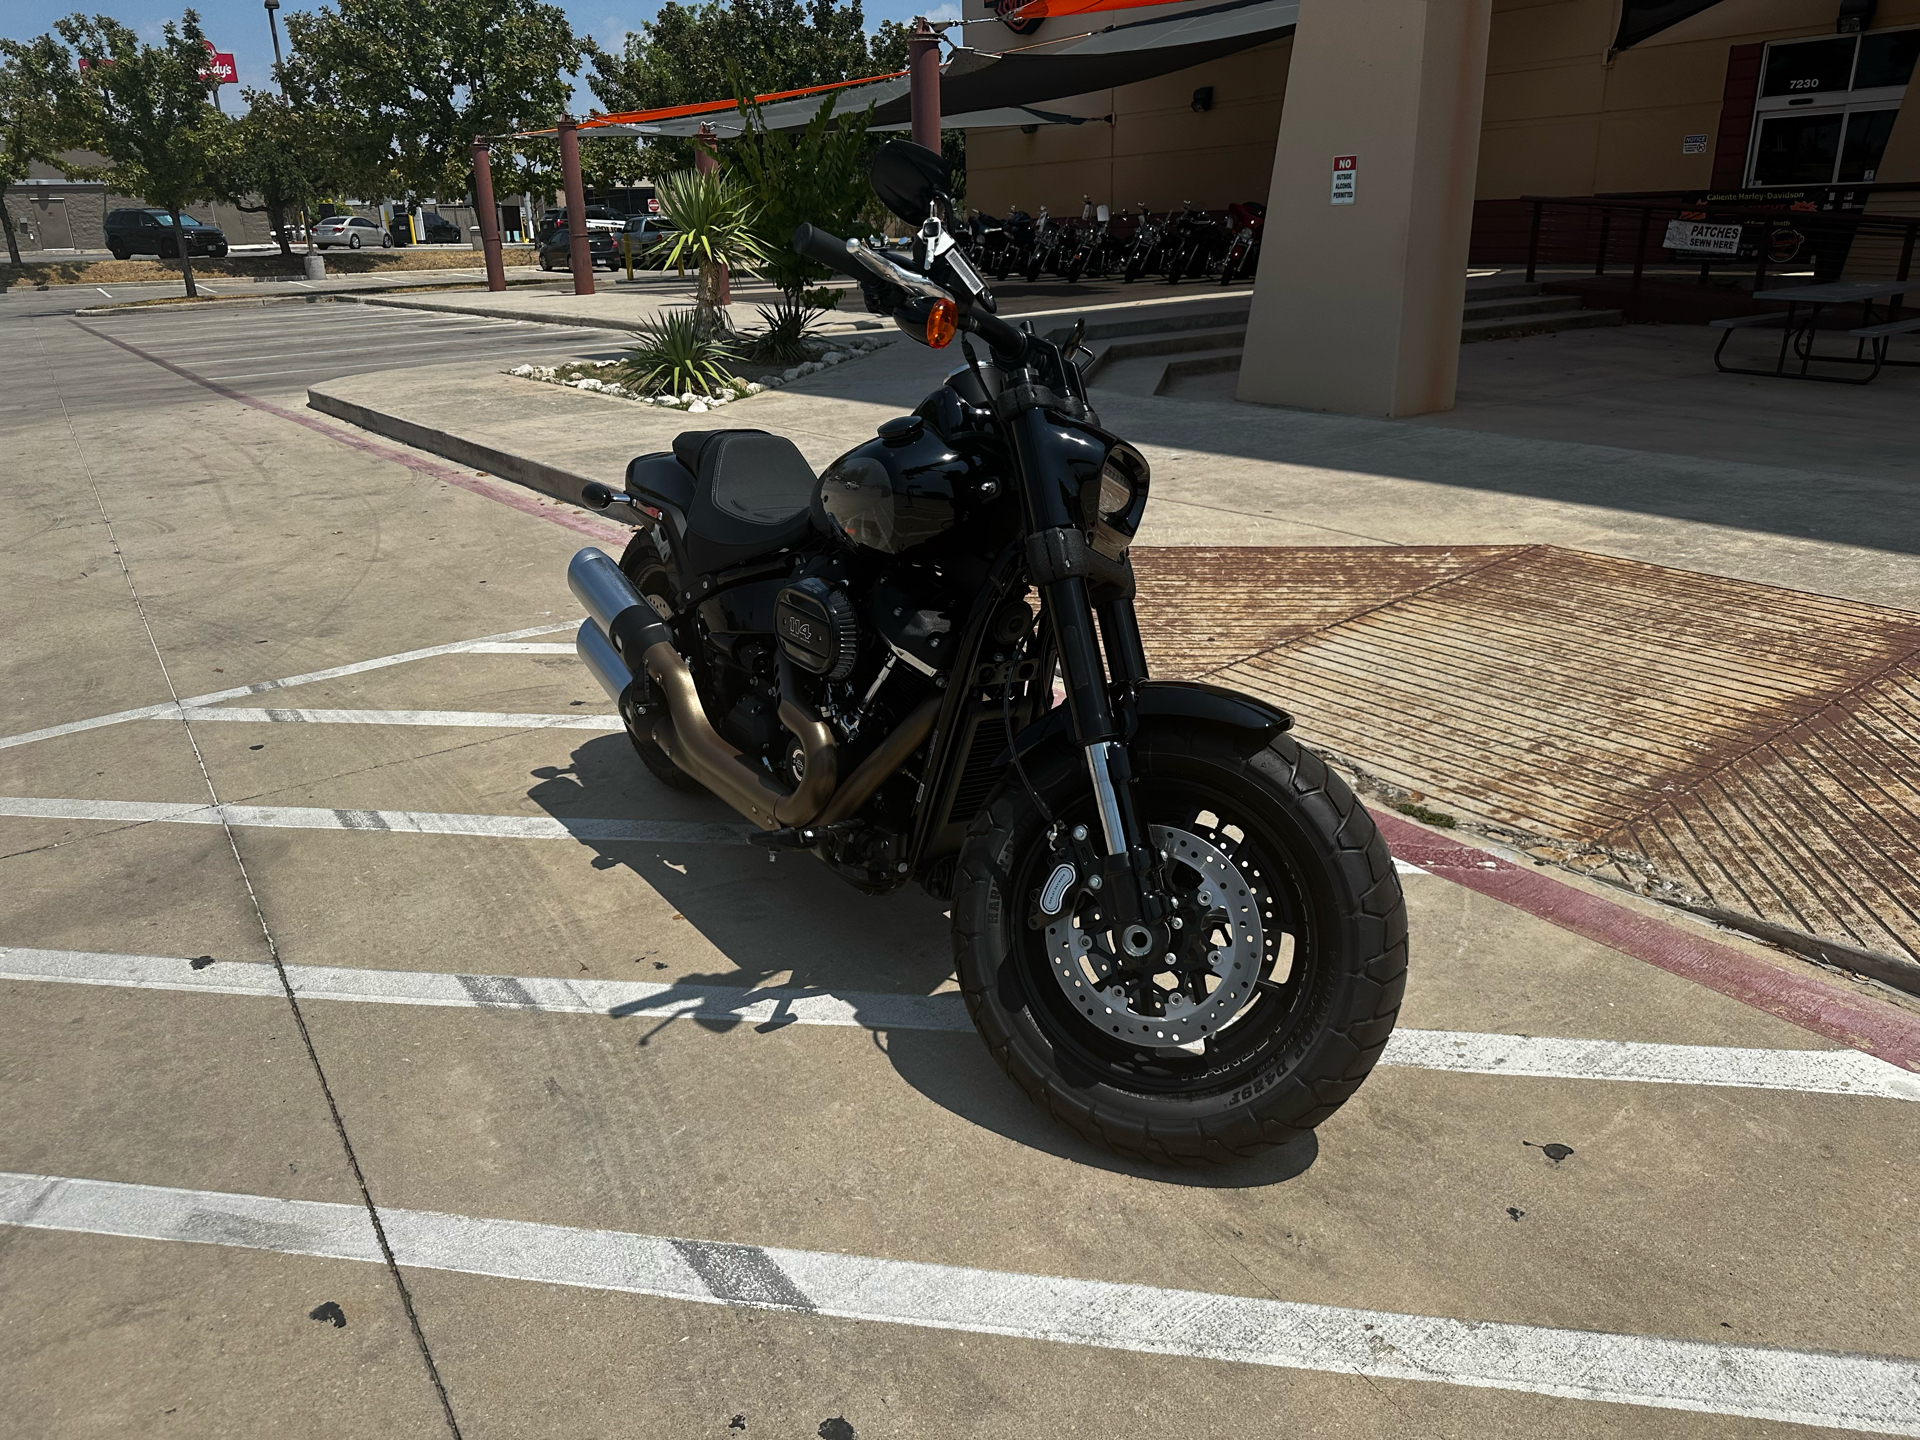 2022 Harley-Davidson Fat Bob® 114 in San Antonio, Texas - Photo 2